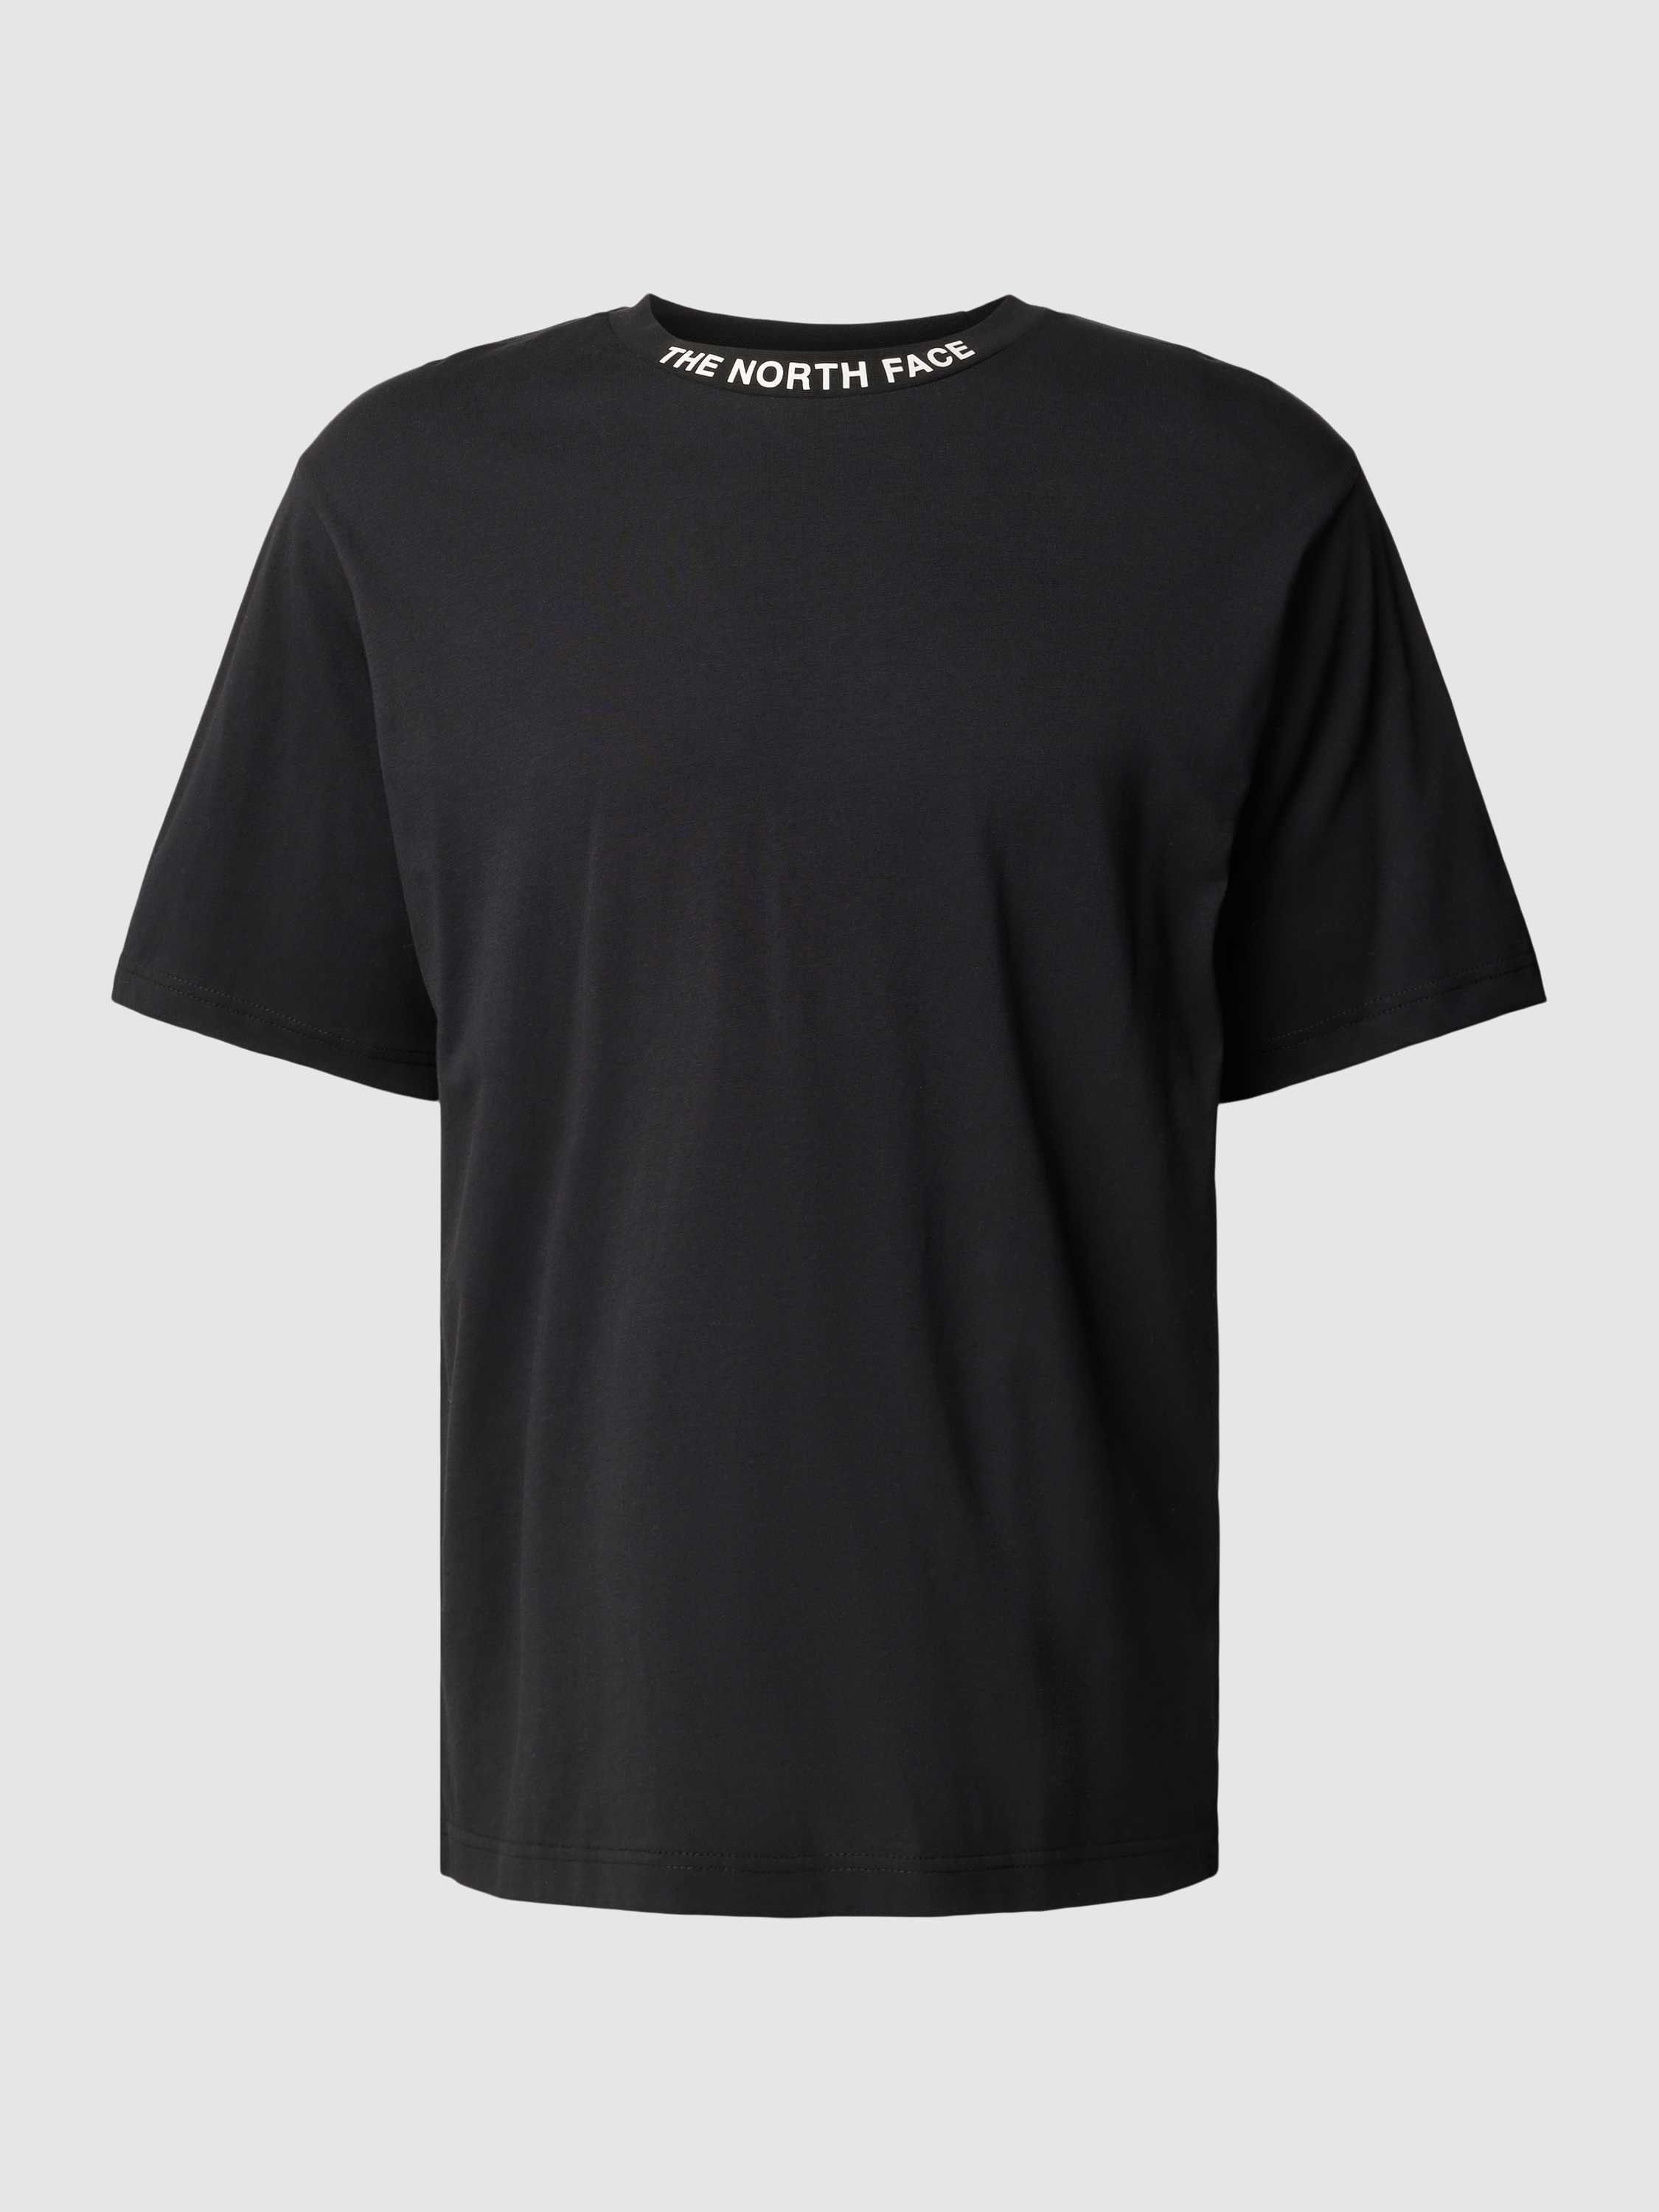 The North Face Korte Mouw Heren T-shirt Black Heren